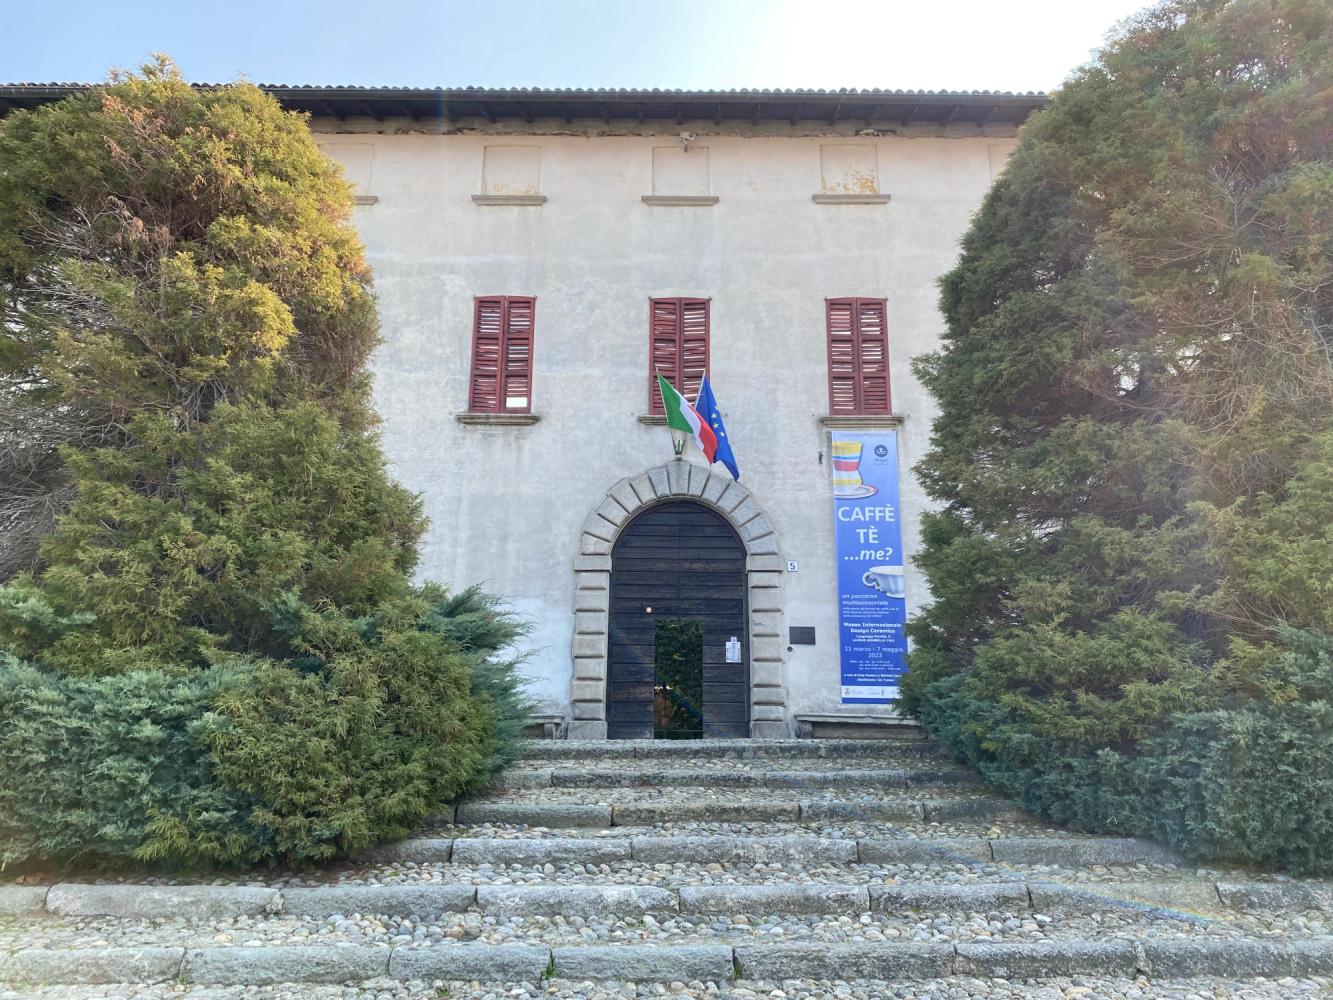 Entrance to the International Ceramic Design Museum